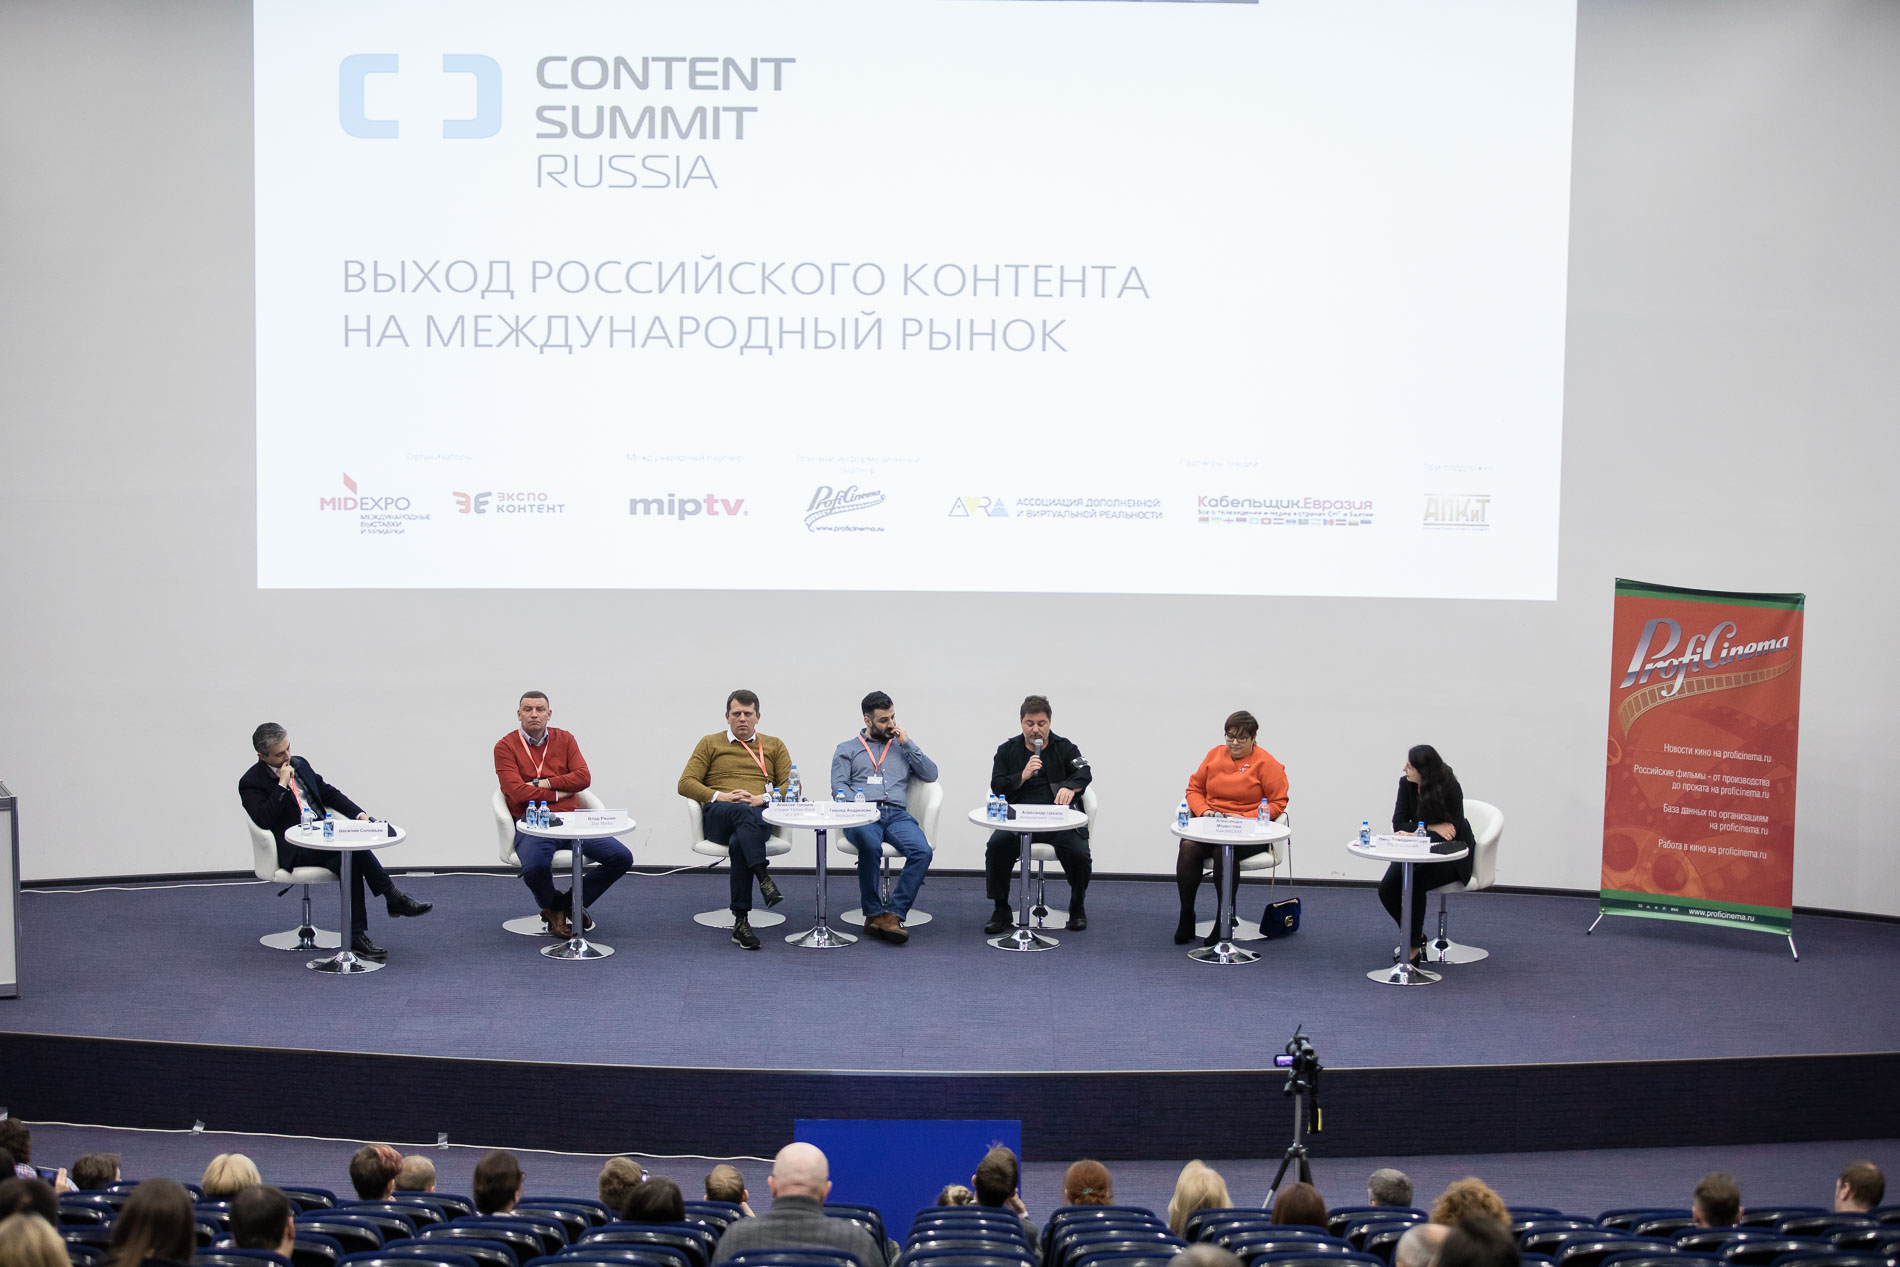 Главные представители индустрии кино и телевидения встретятся 29 января на Content Summit Russia